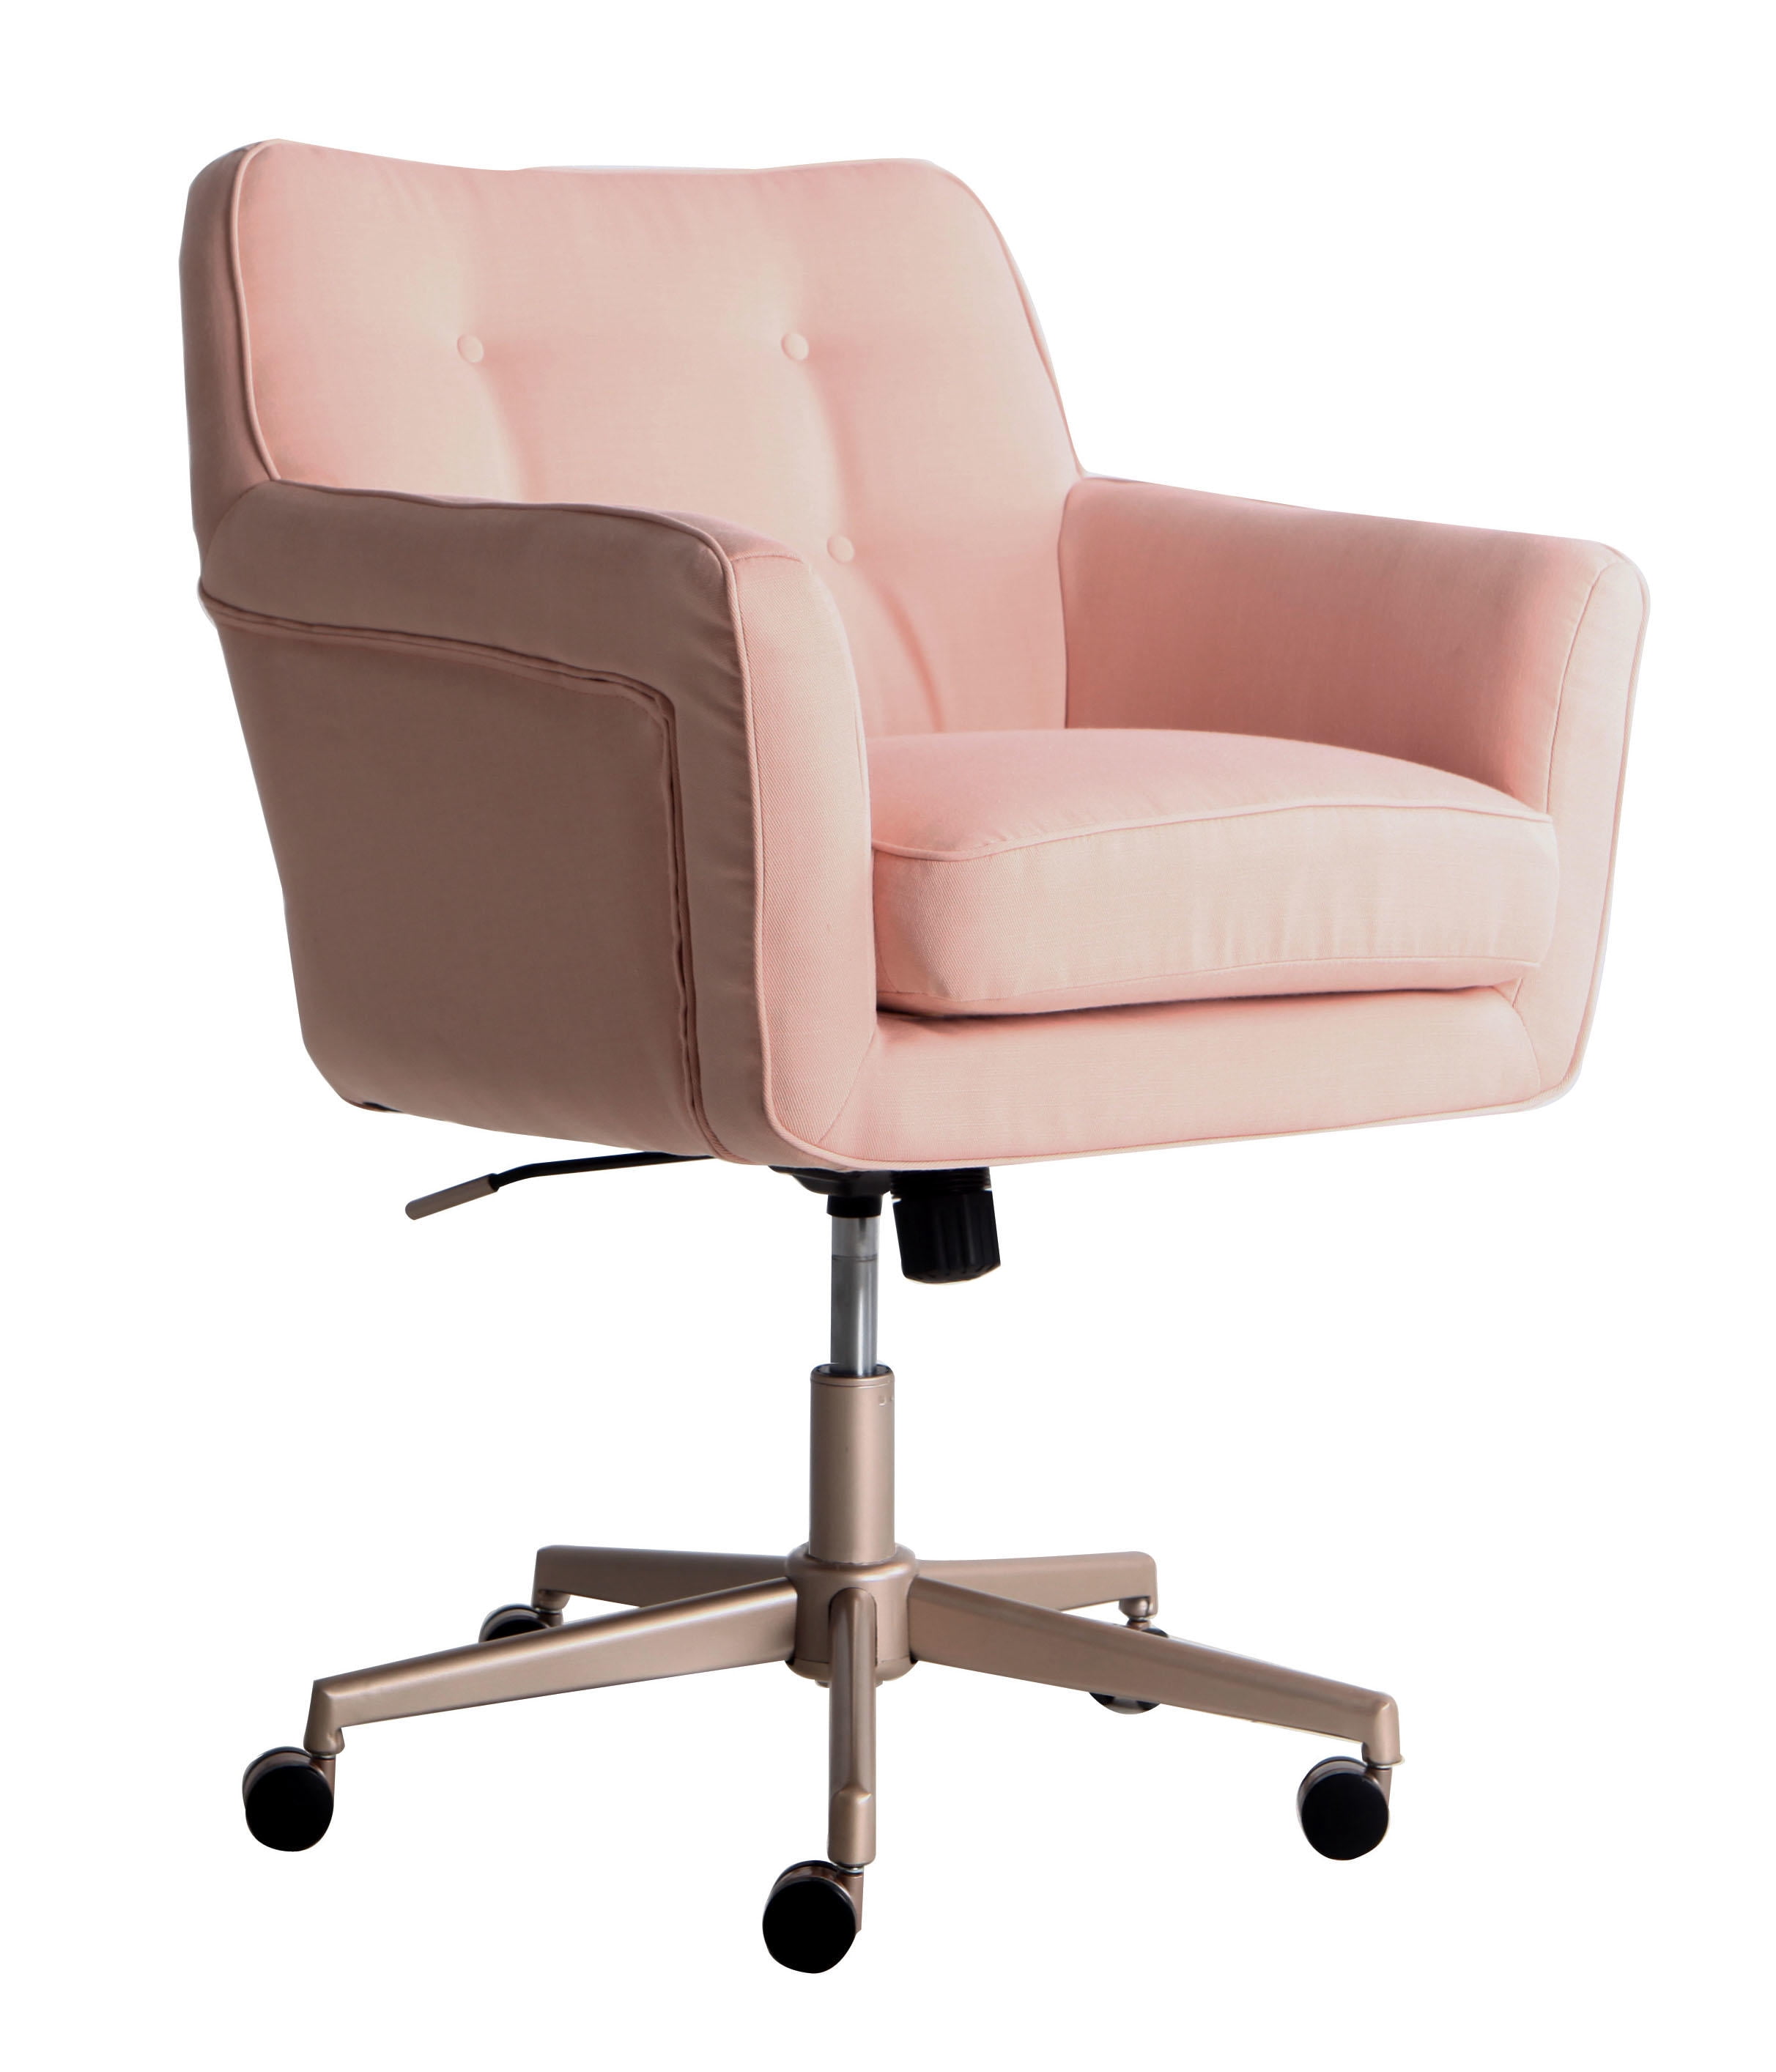 Serta Style Ashland Home Office Chair, Blush Pink Twill Fabric - Walmart.com